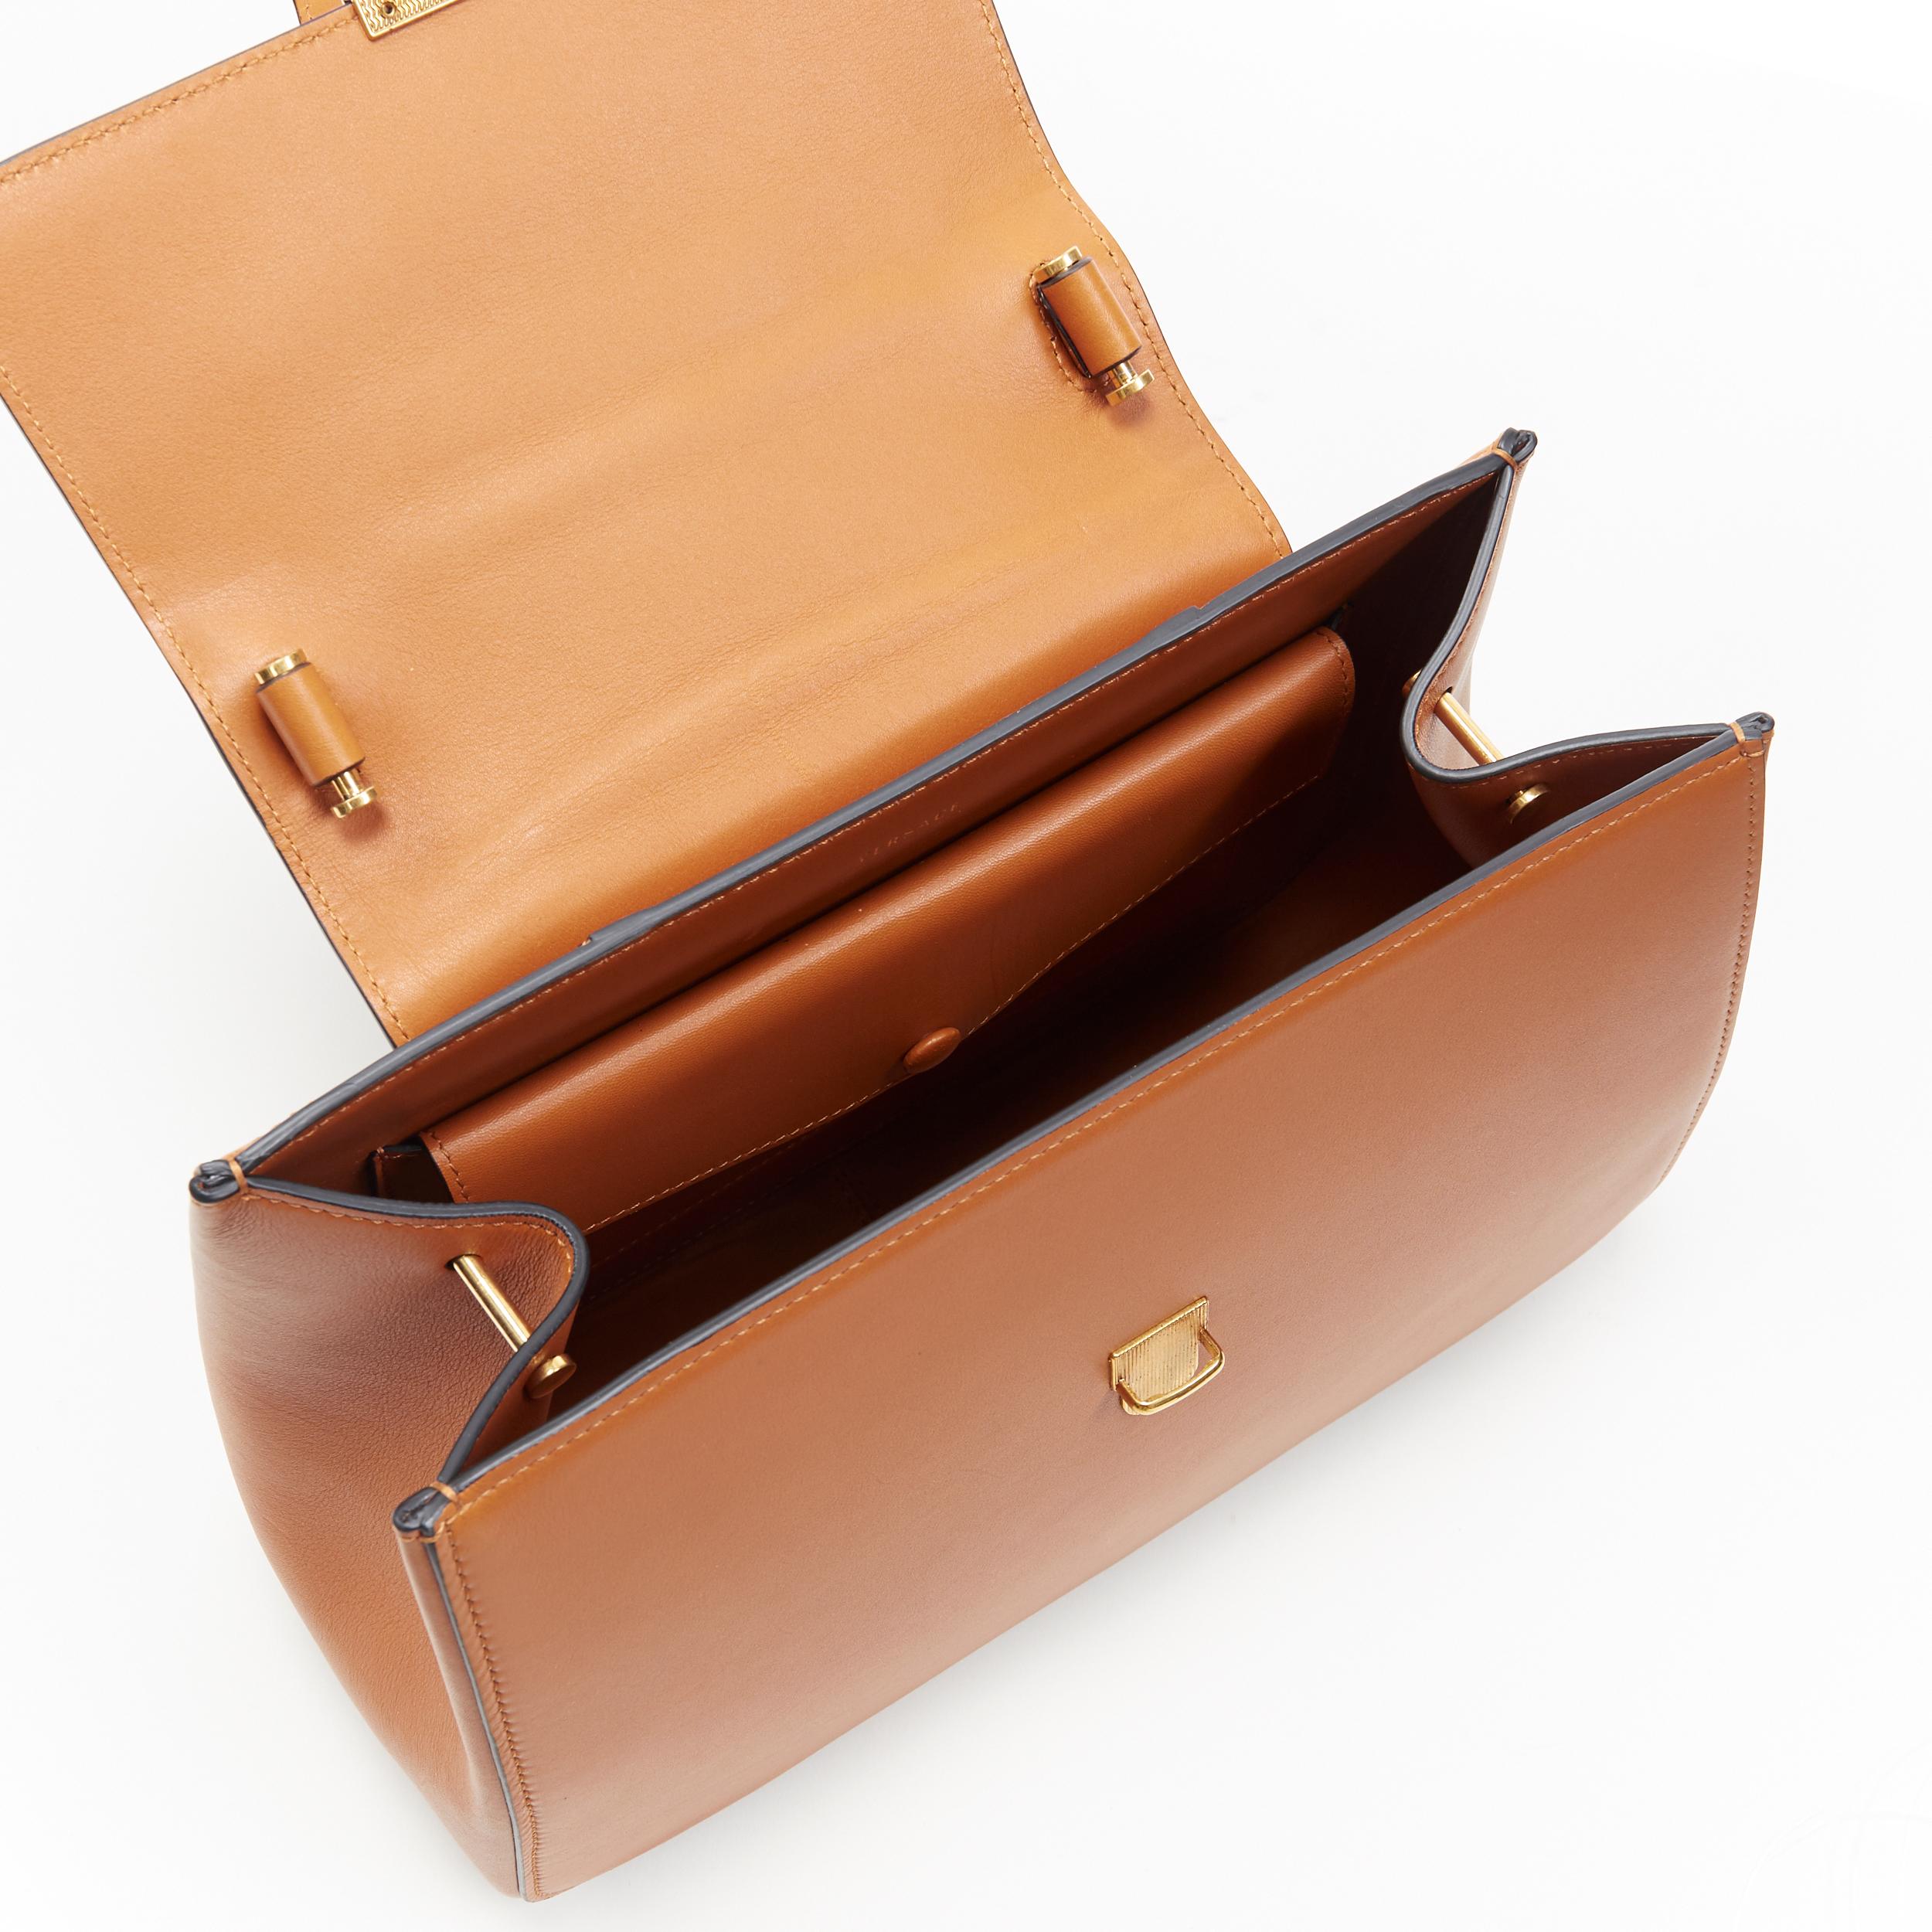 VERSACE Virtus cognac brown leather gold buckle flap top handle satchel bag 2